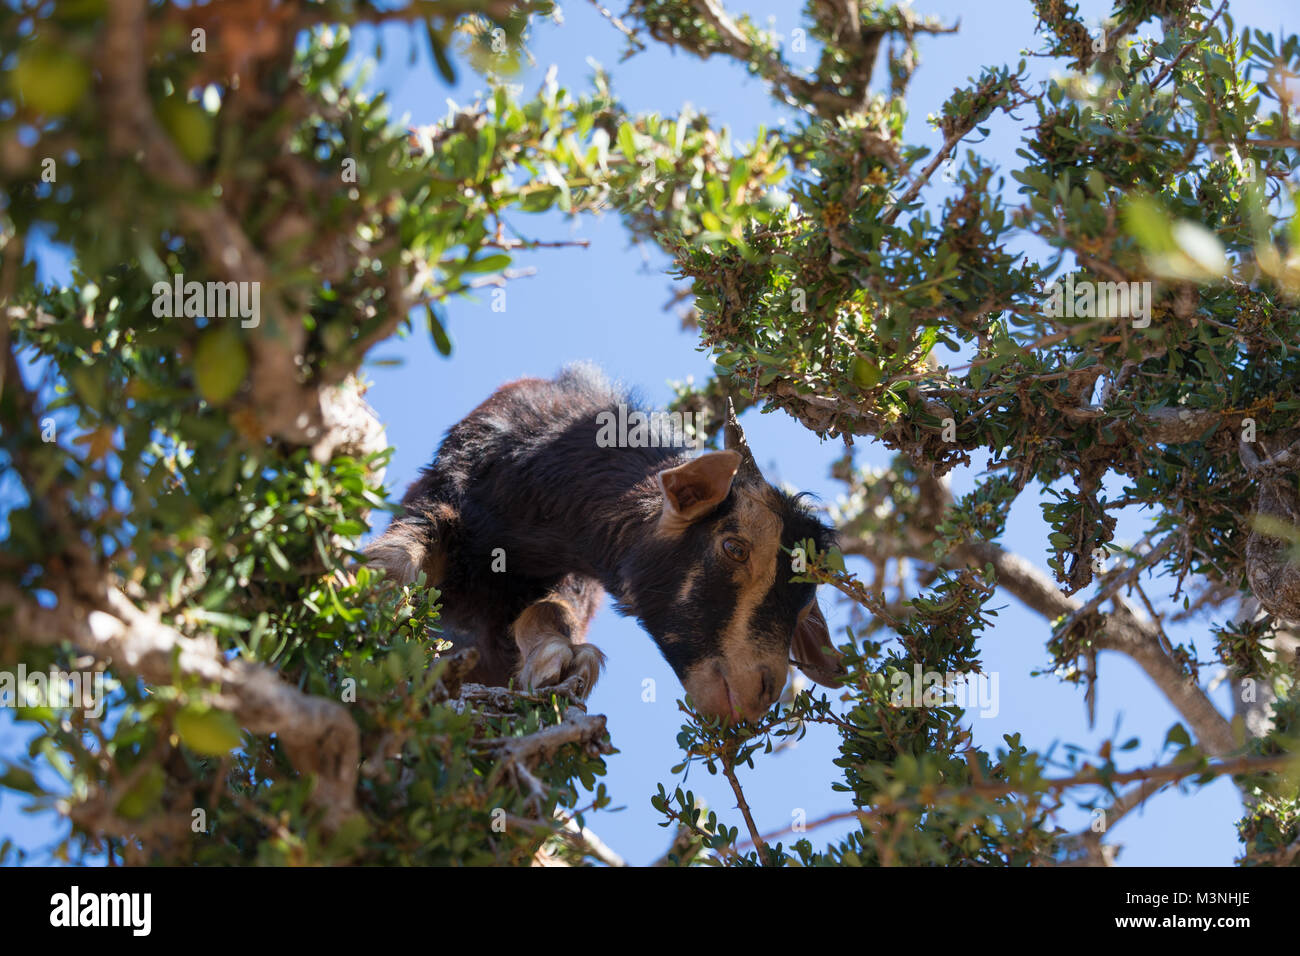 Tree goat of Morocco climbs tree to eat argan fruits Stock Photo